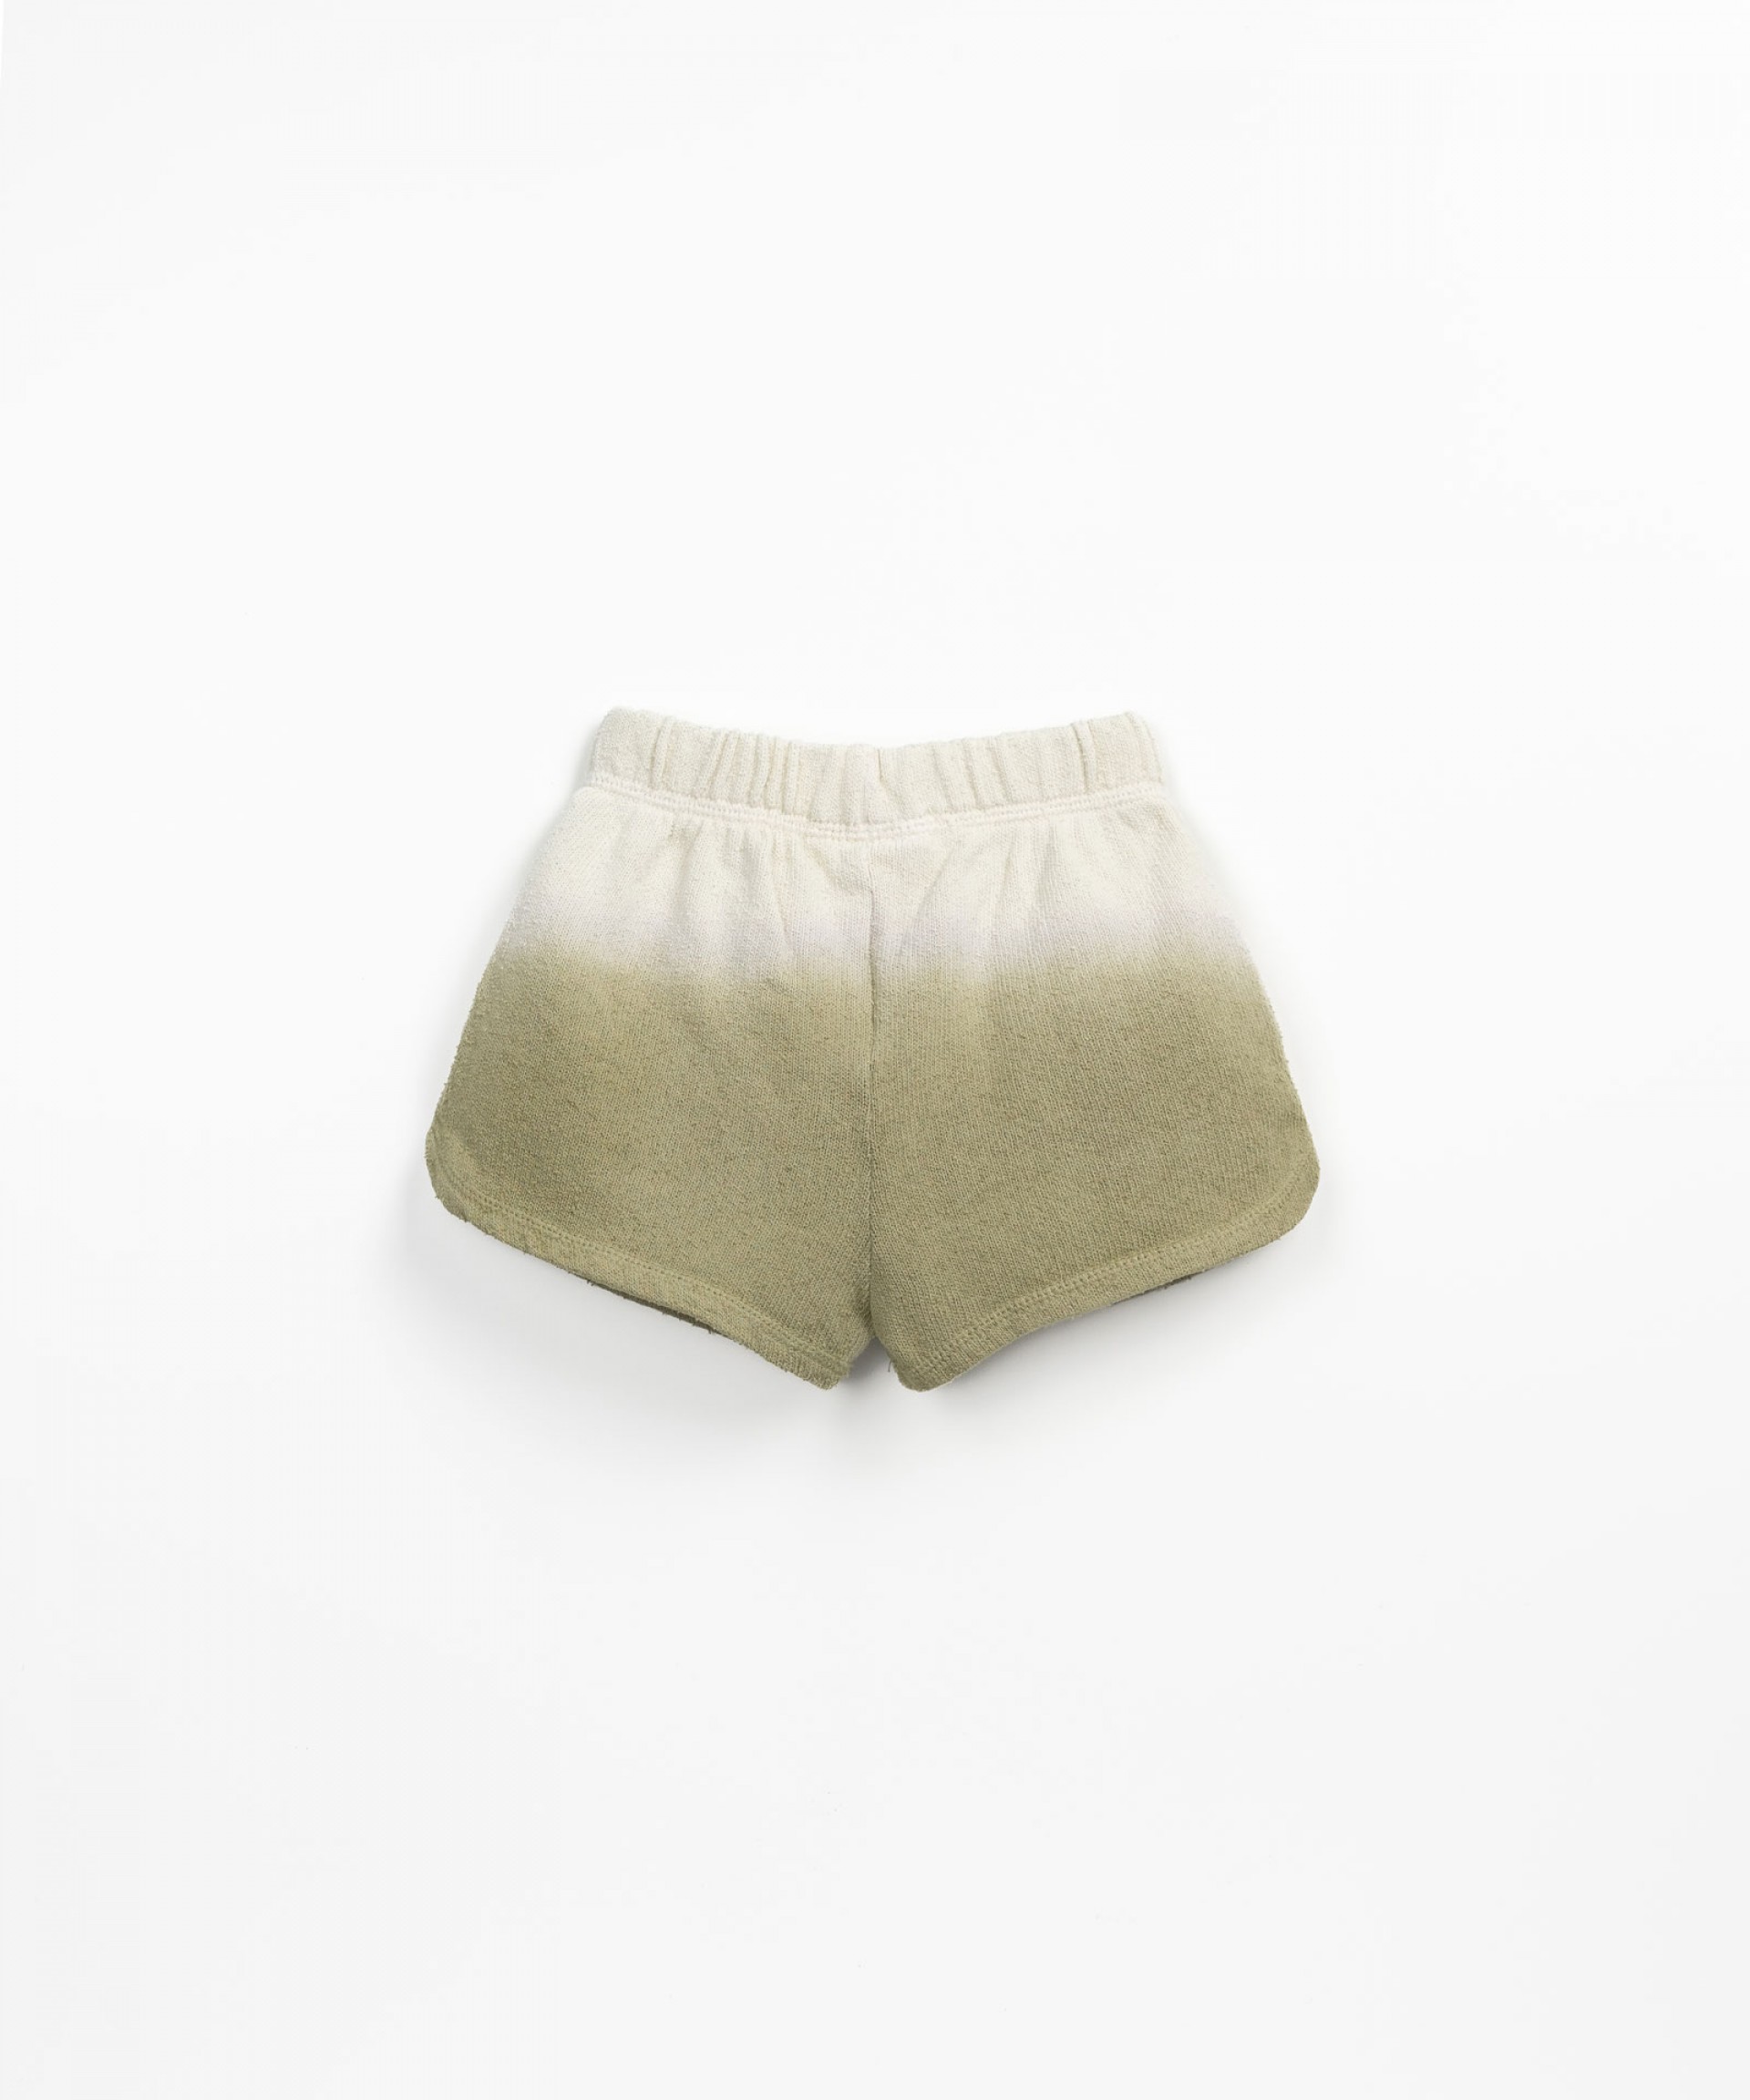 Shorts with elastic waist | Textile Art